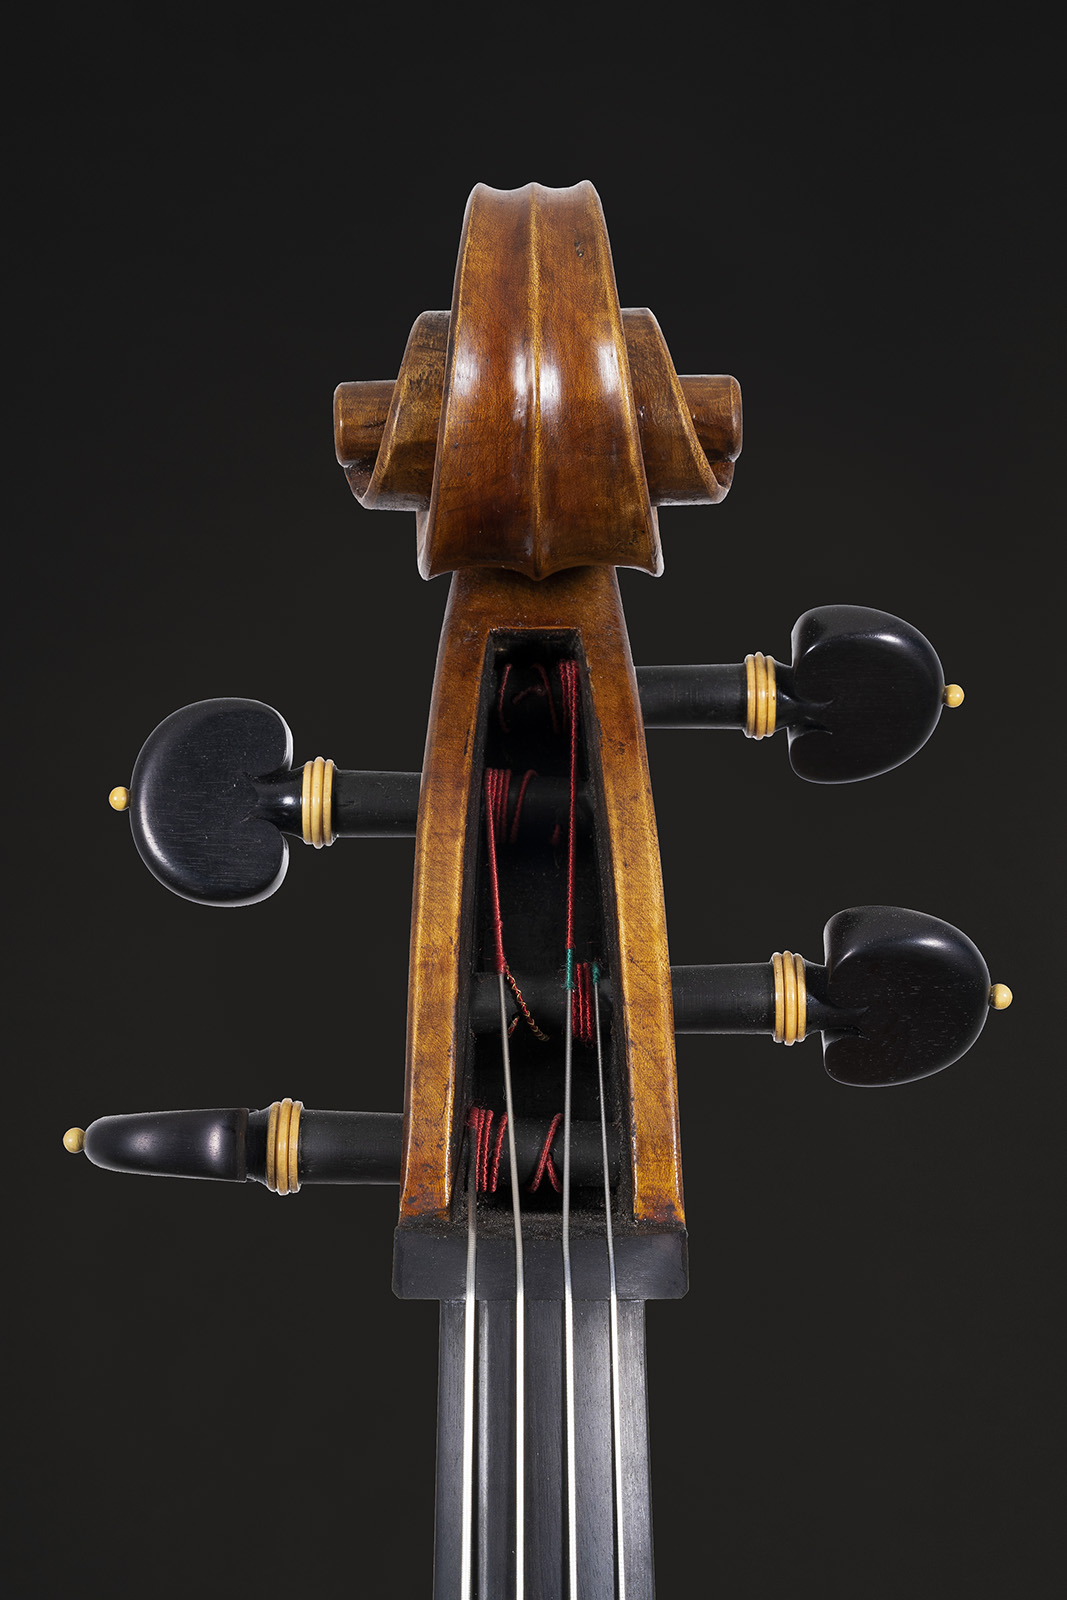 Antonio Stradivari Cremona 1730 “Cristiani“ “Kyoto“ - Image 5